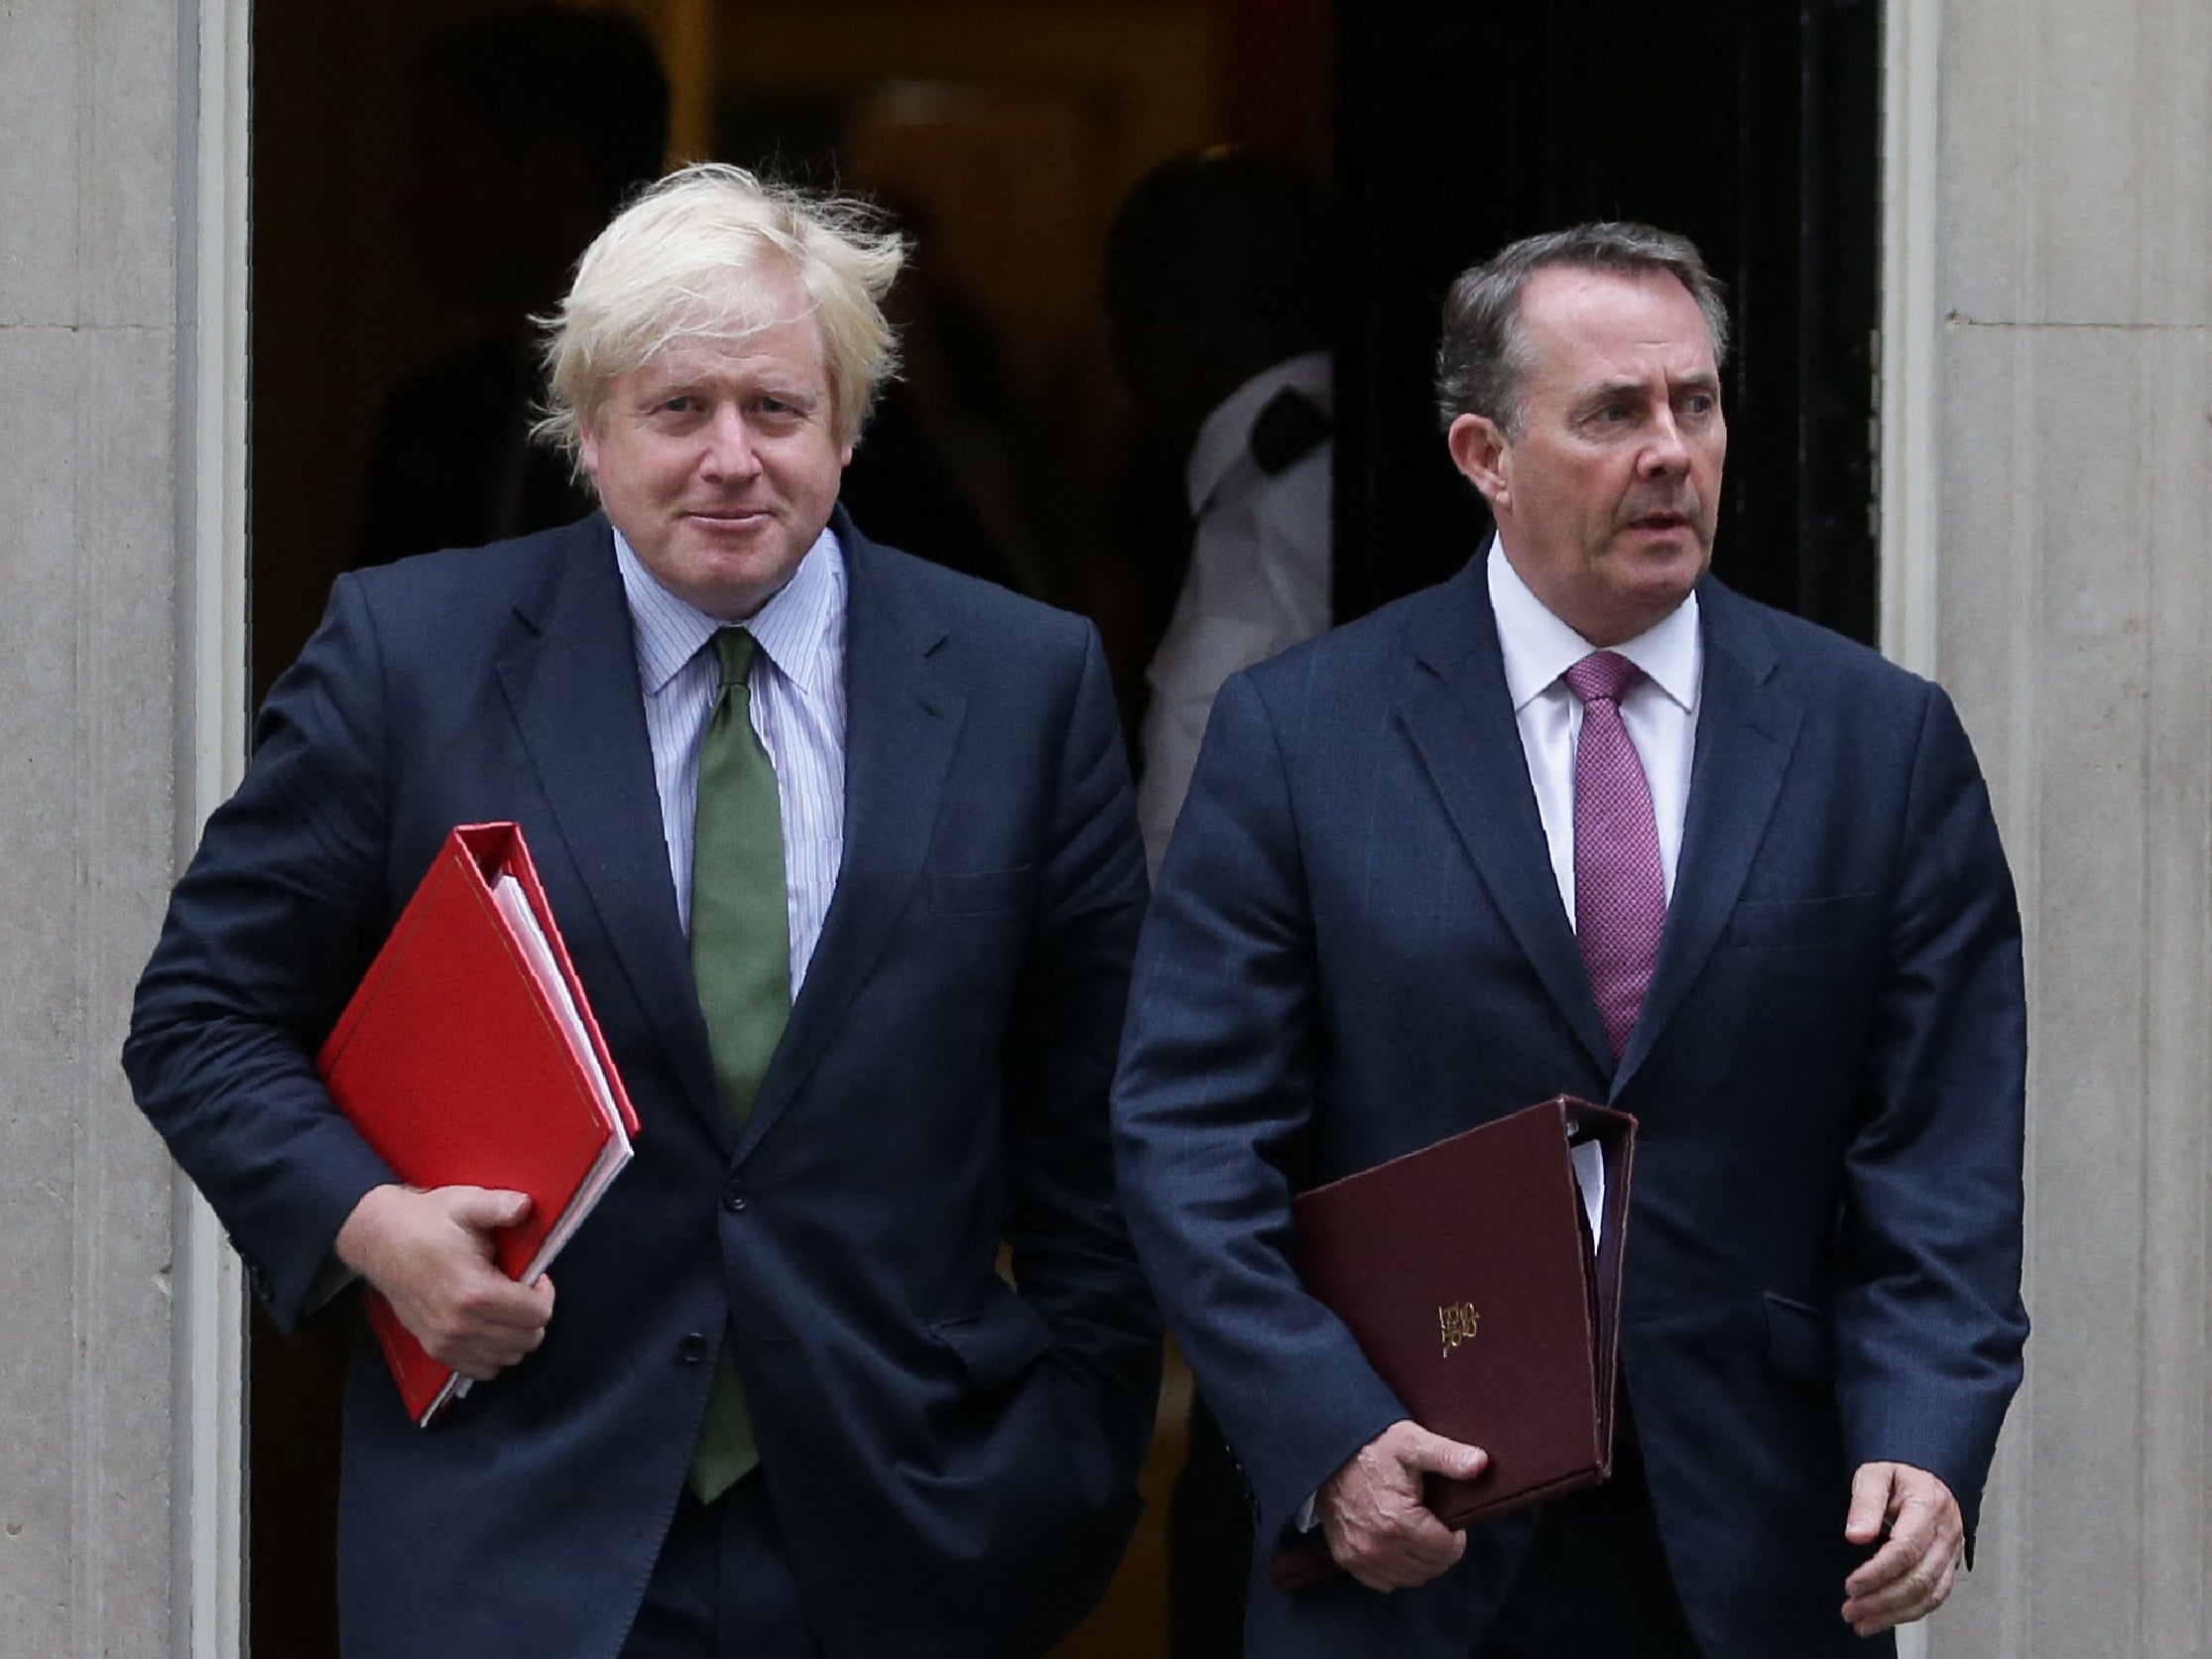 Liam Fox (right) has urged Boris Johnson (left) to resign as prime minister